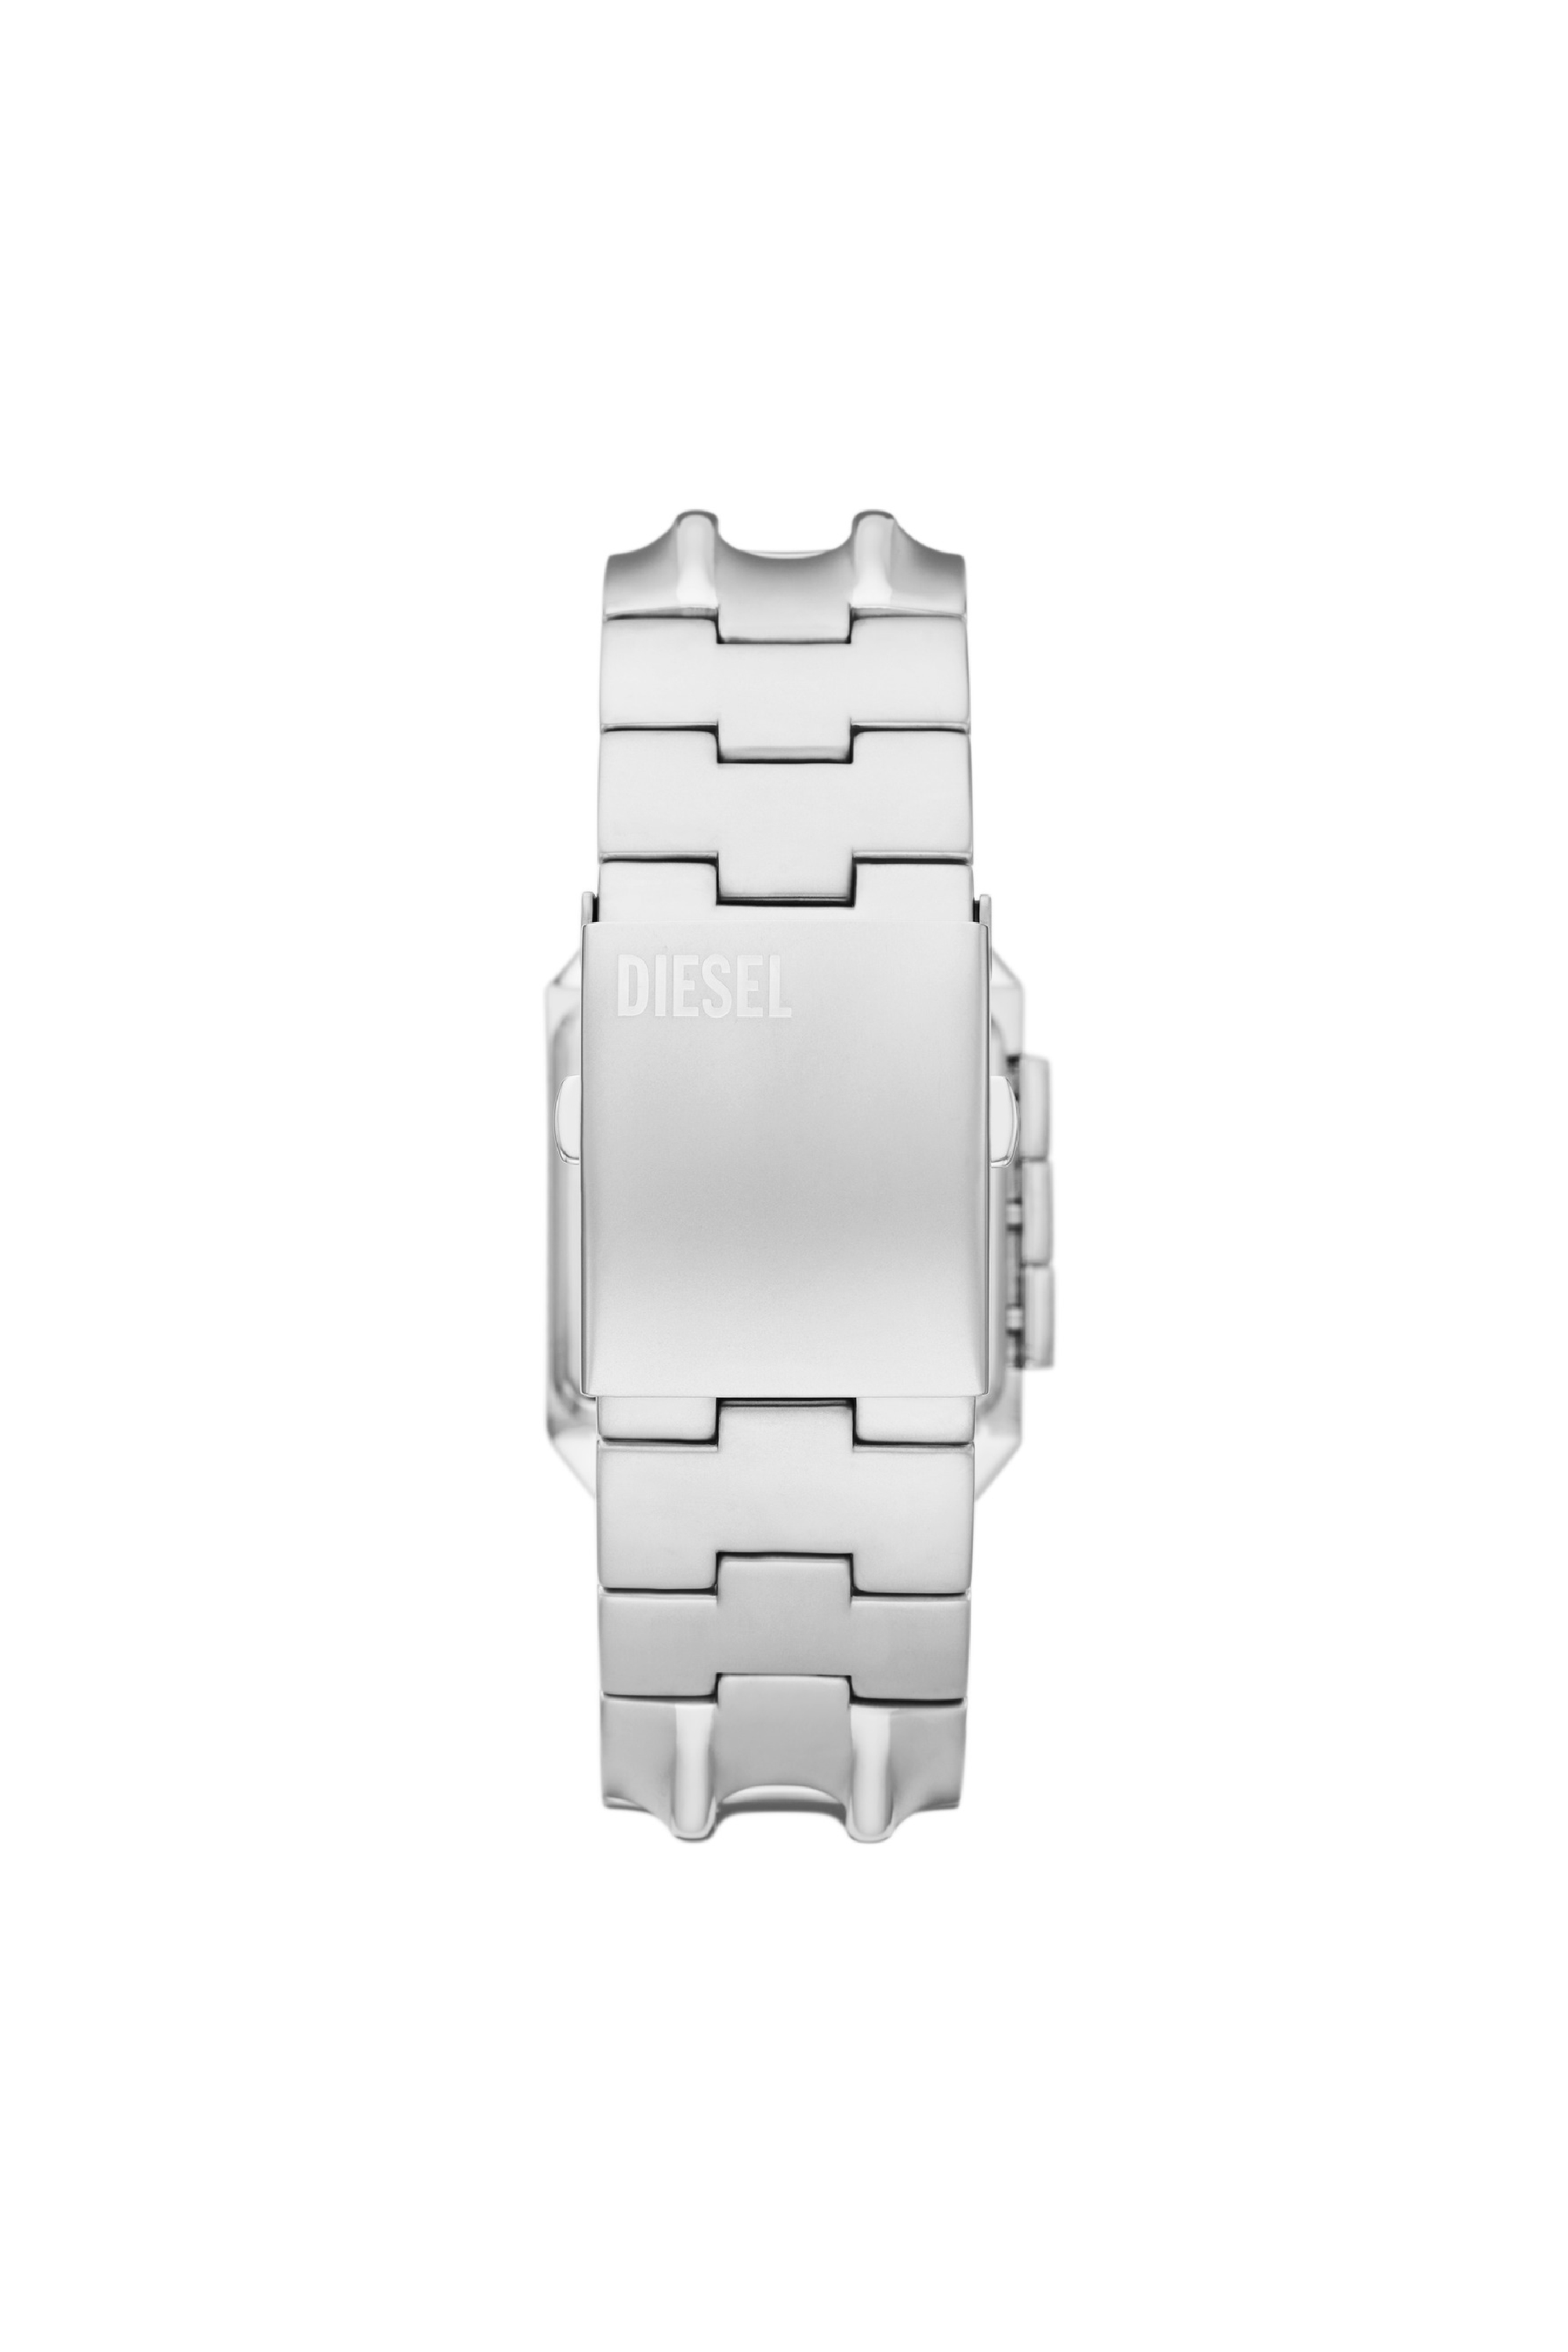 Diesel - DZ2155, Unisex Croco Digital stainless steel watch in Silver - Image 2